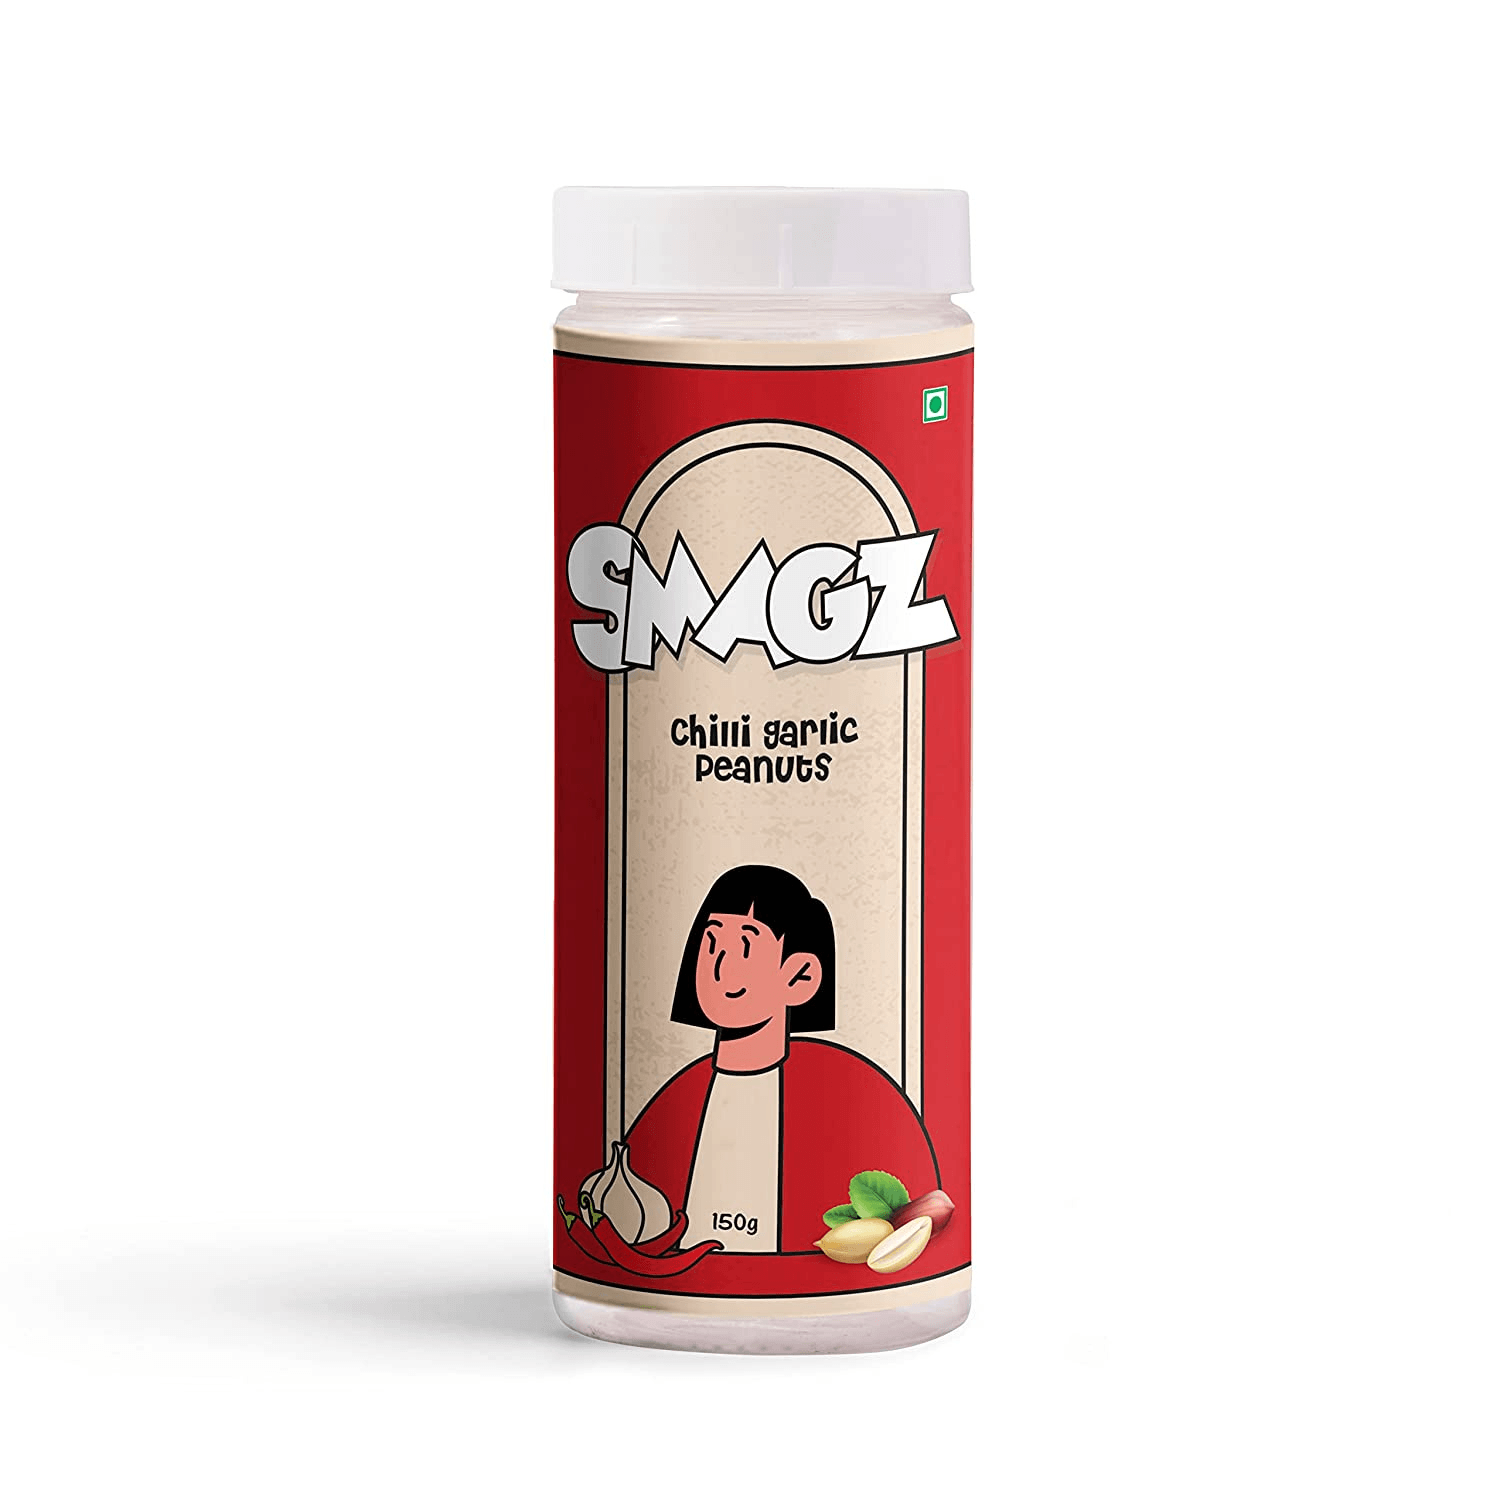 SMAGZ Chilli Garlic Peanut Healthy Namkeen and Snacks